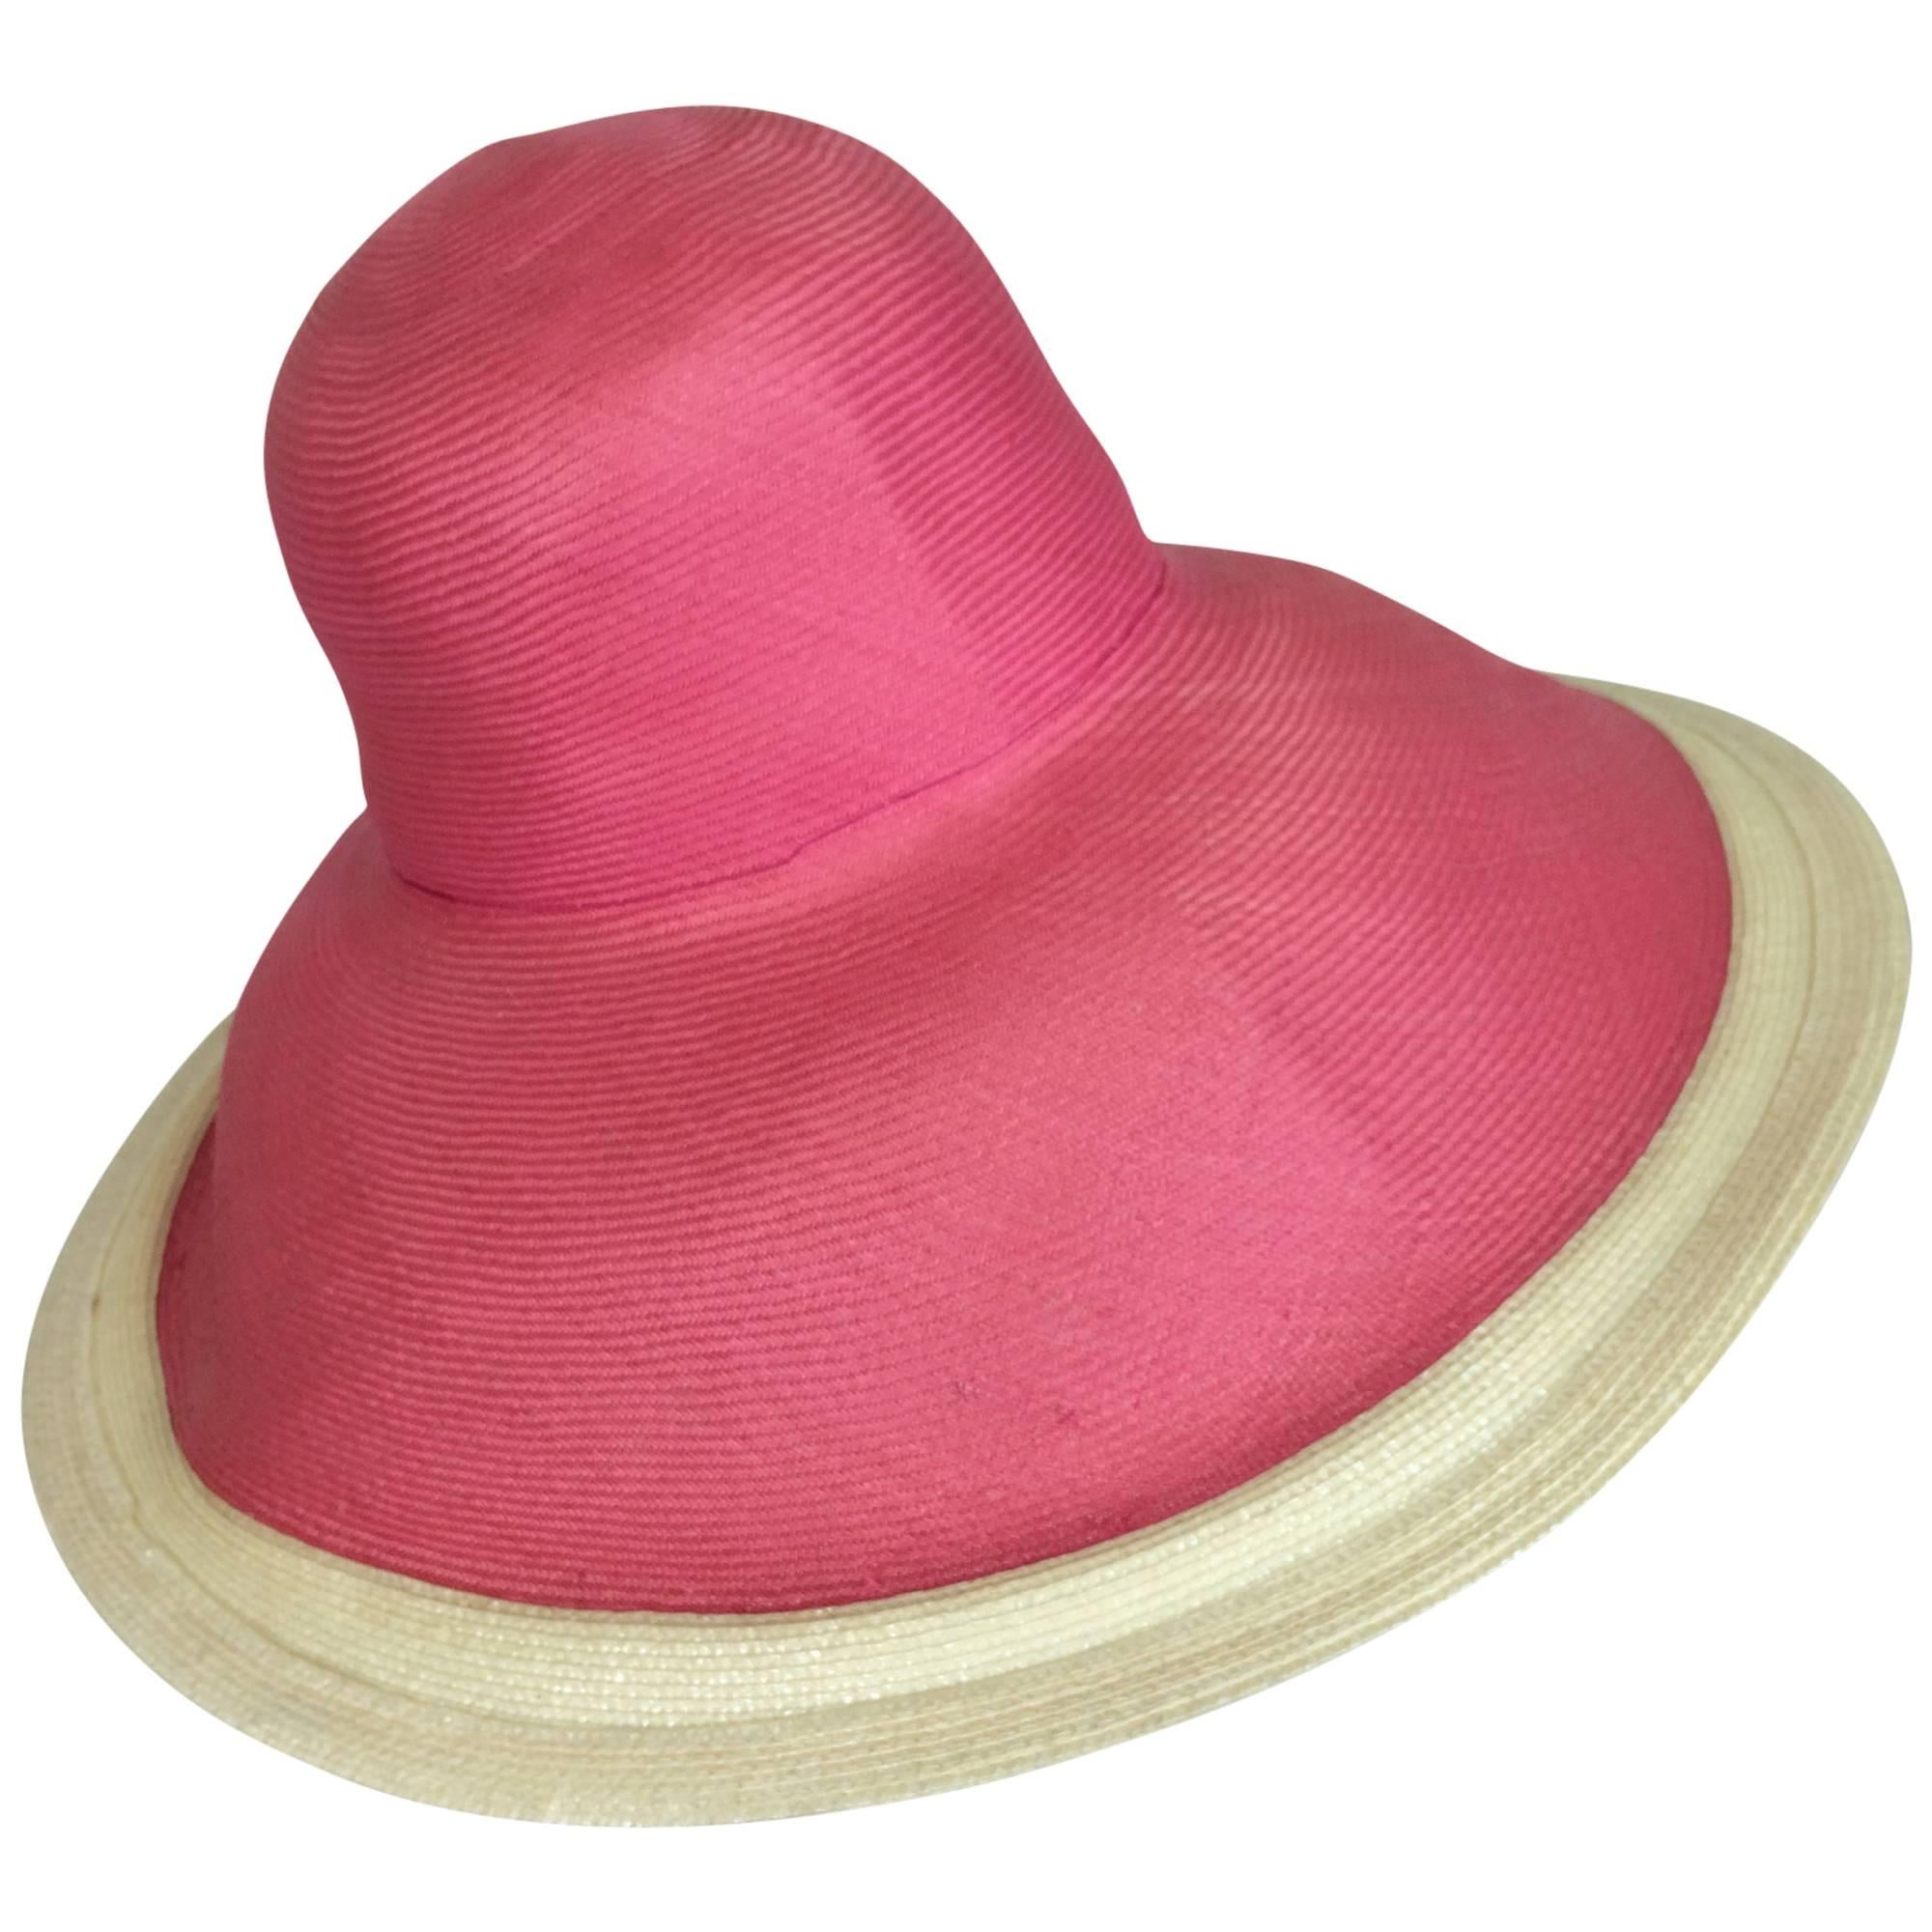 Eric Javits pink & natural fine straw wide brim hat